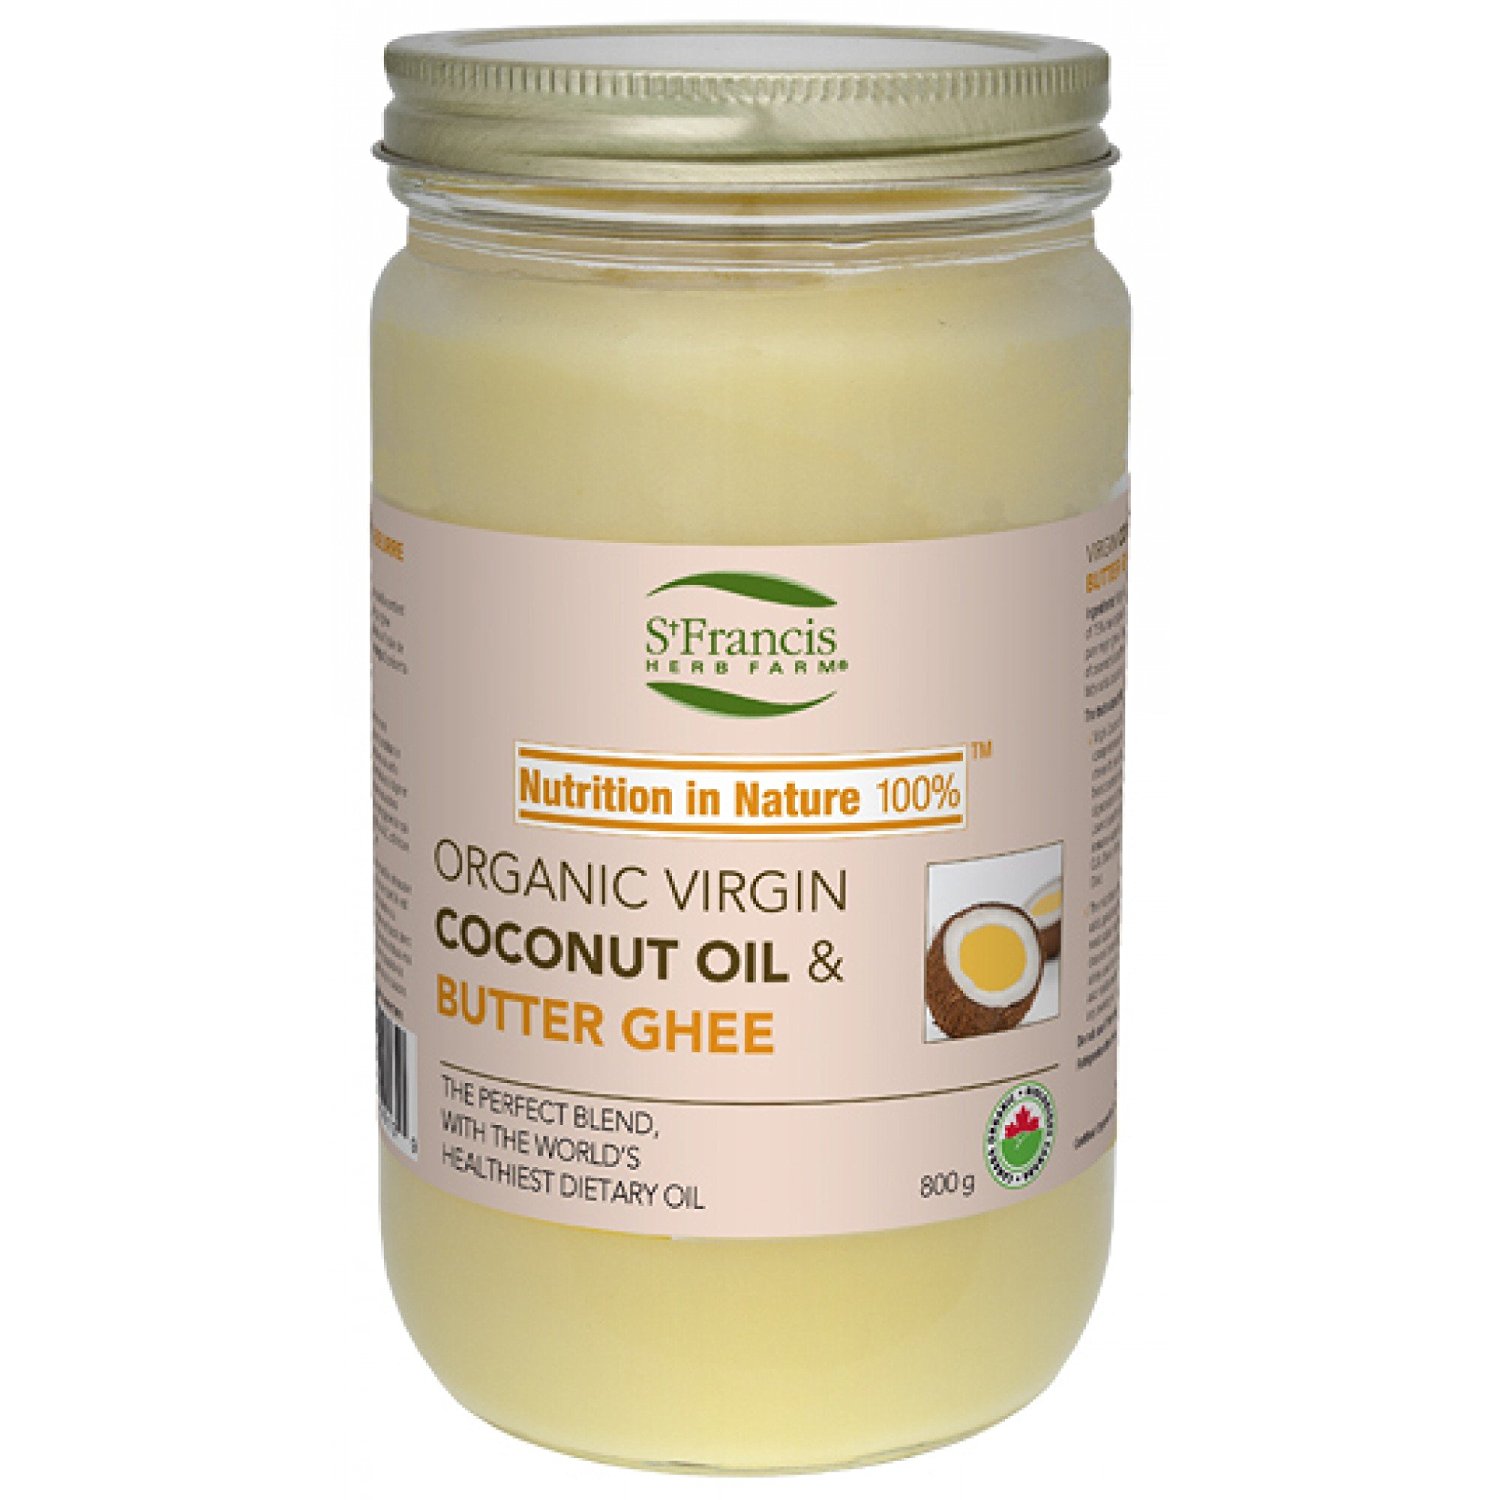 Coconut Oil & Butter Ghee Brand: St Francis